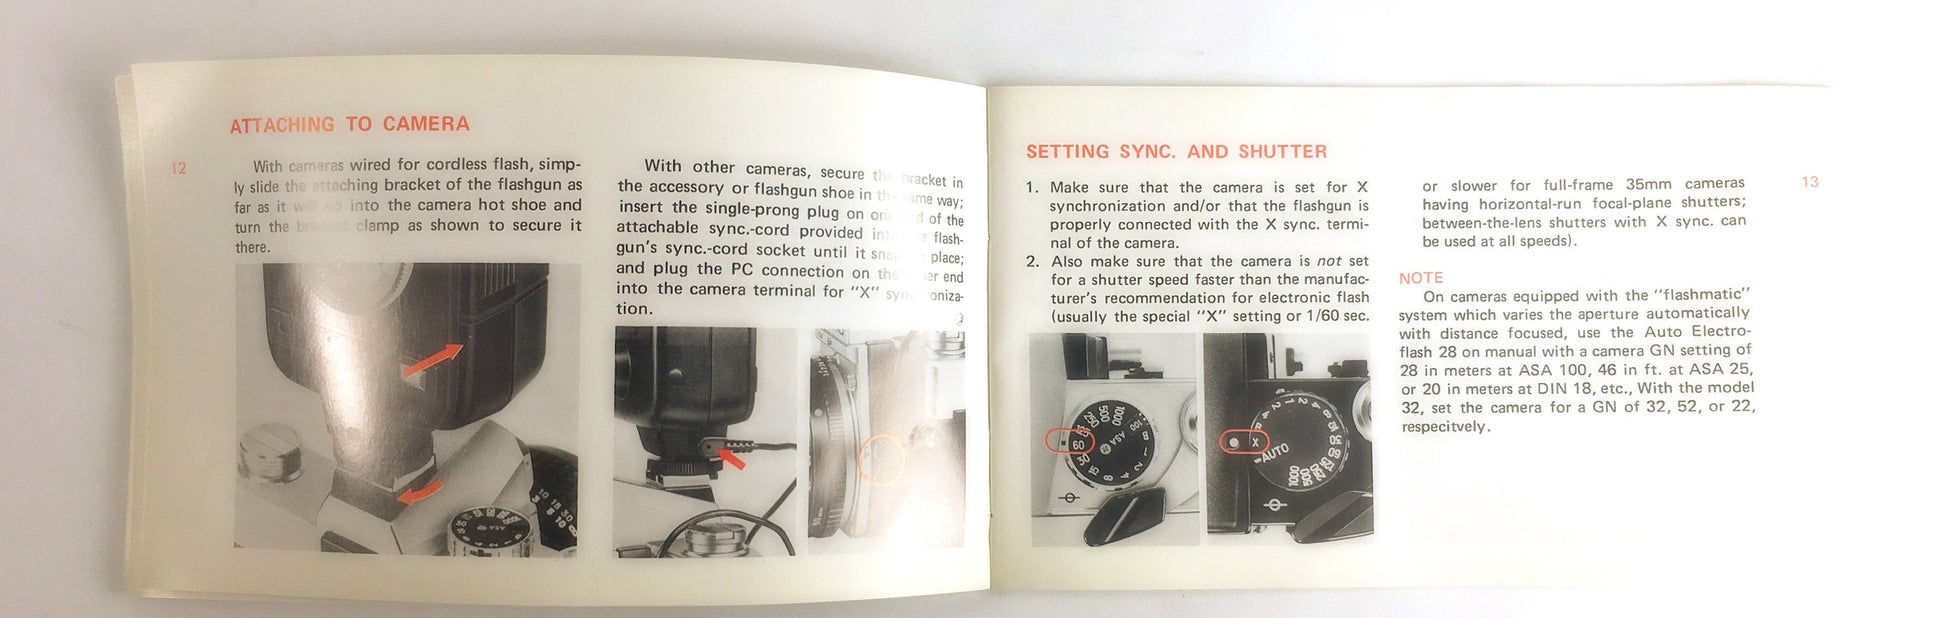 1975 Minolta Masters Auto Electroflash 28 32 owner's camera manual / brochure. Vintage Minolta instruction booklet. Photographer gift